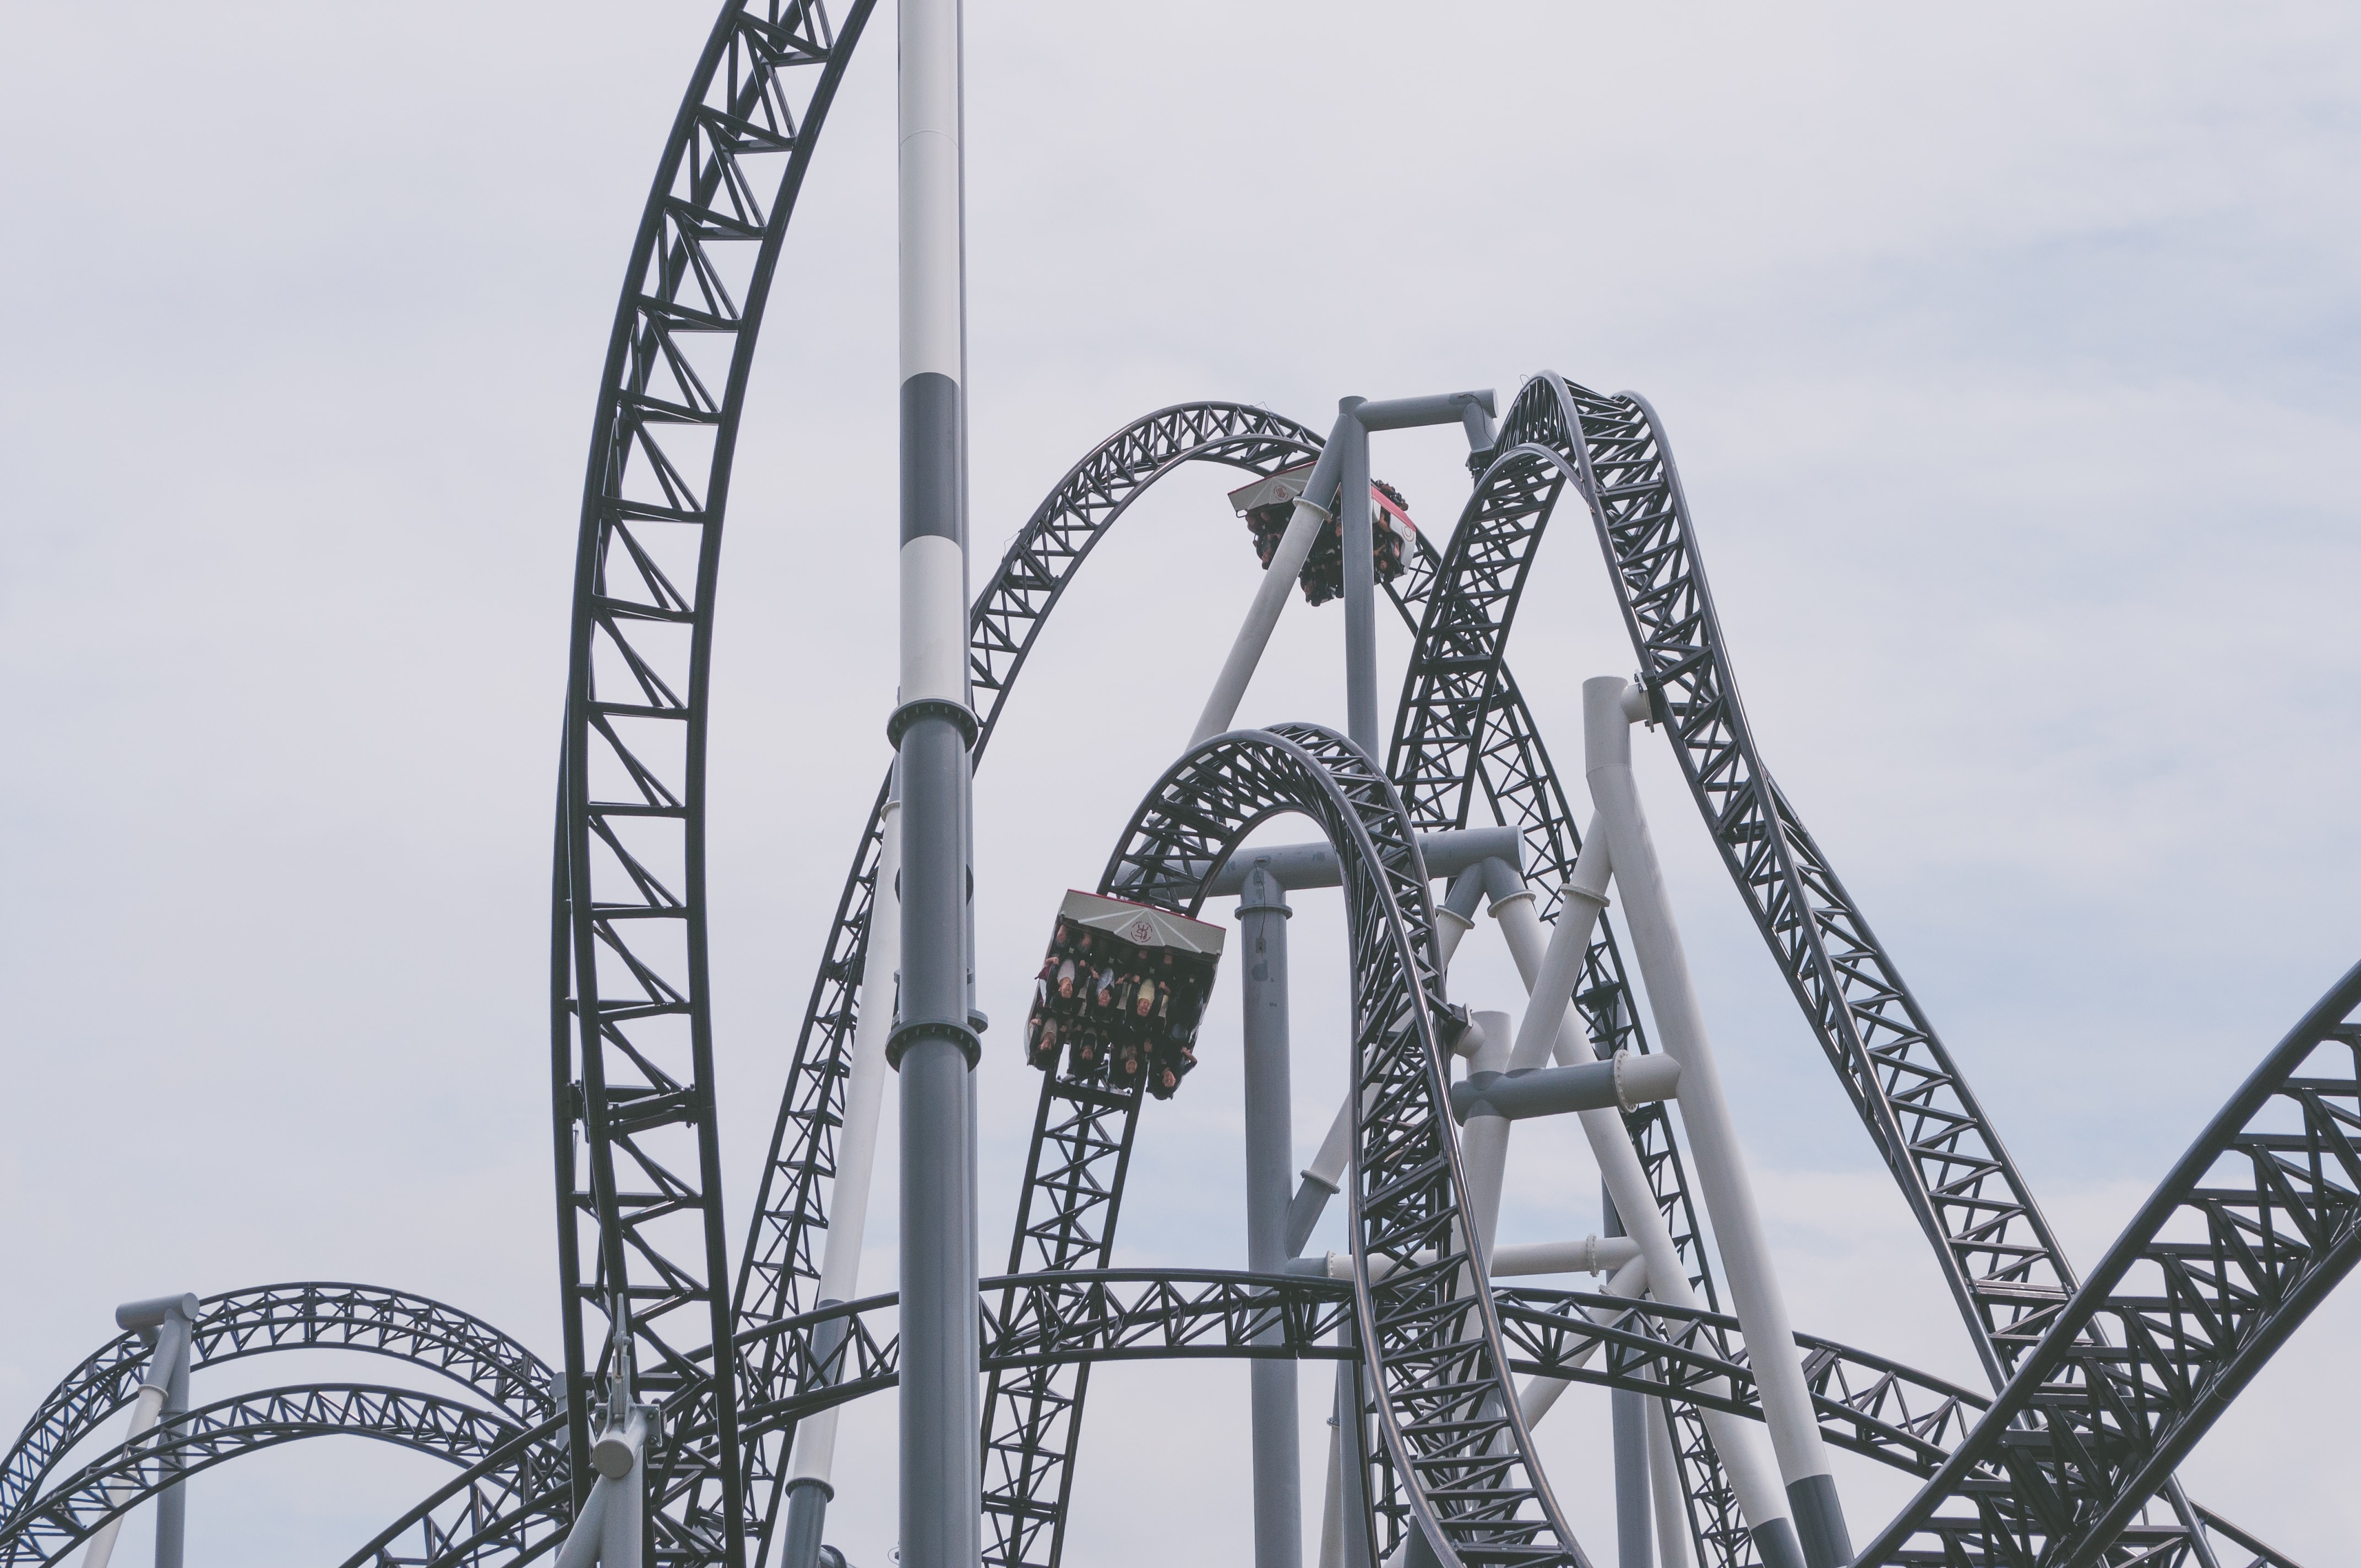 Winding steel roller coaster against a light gray sky.